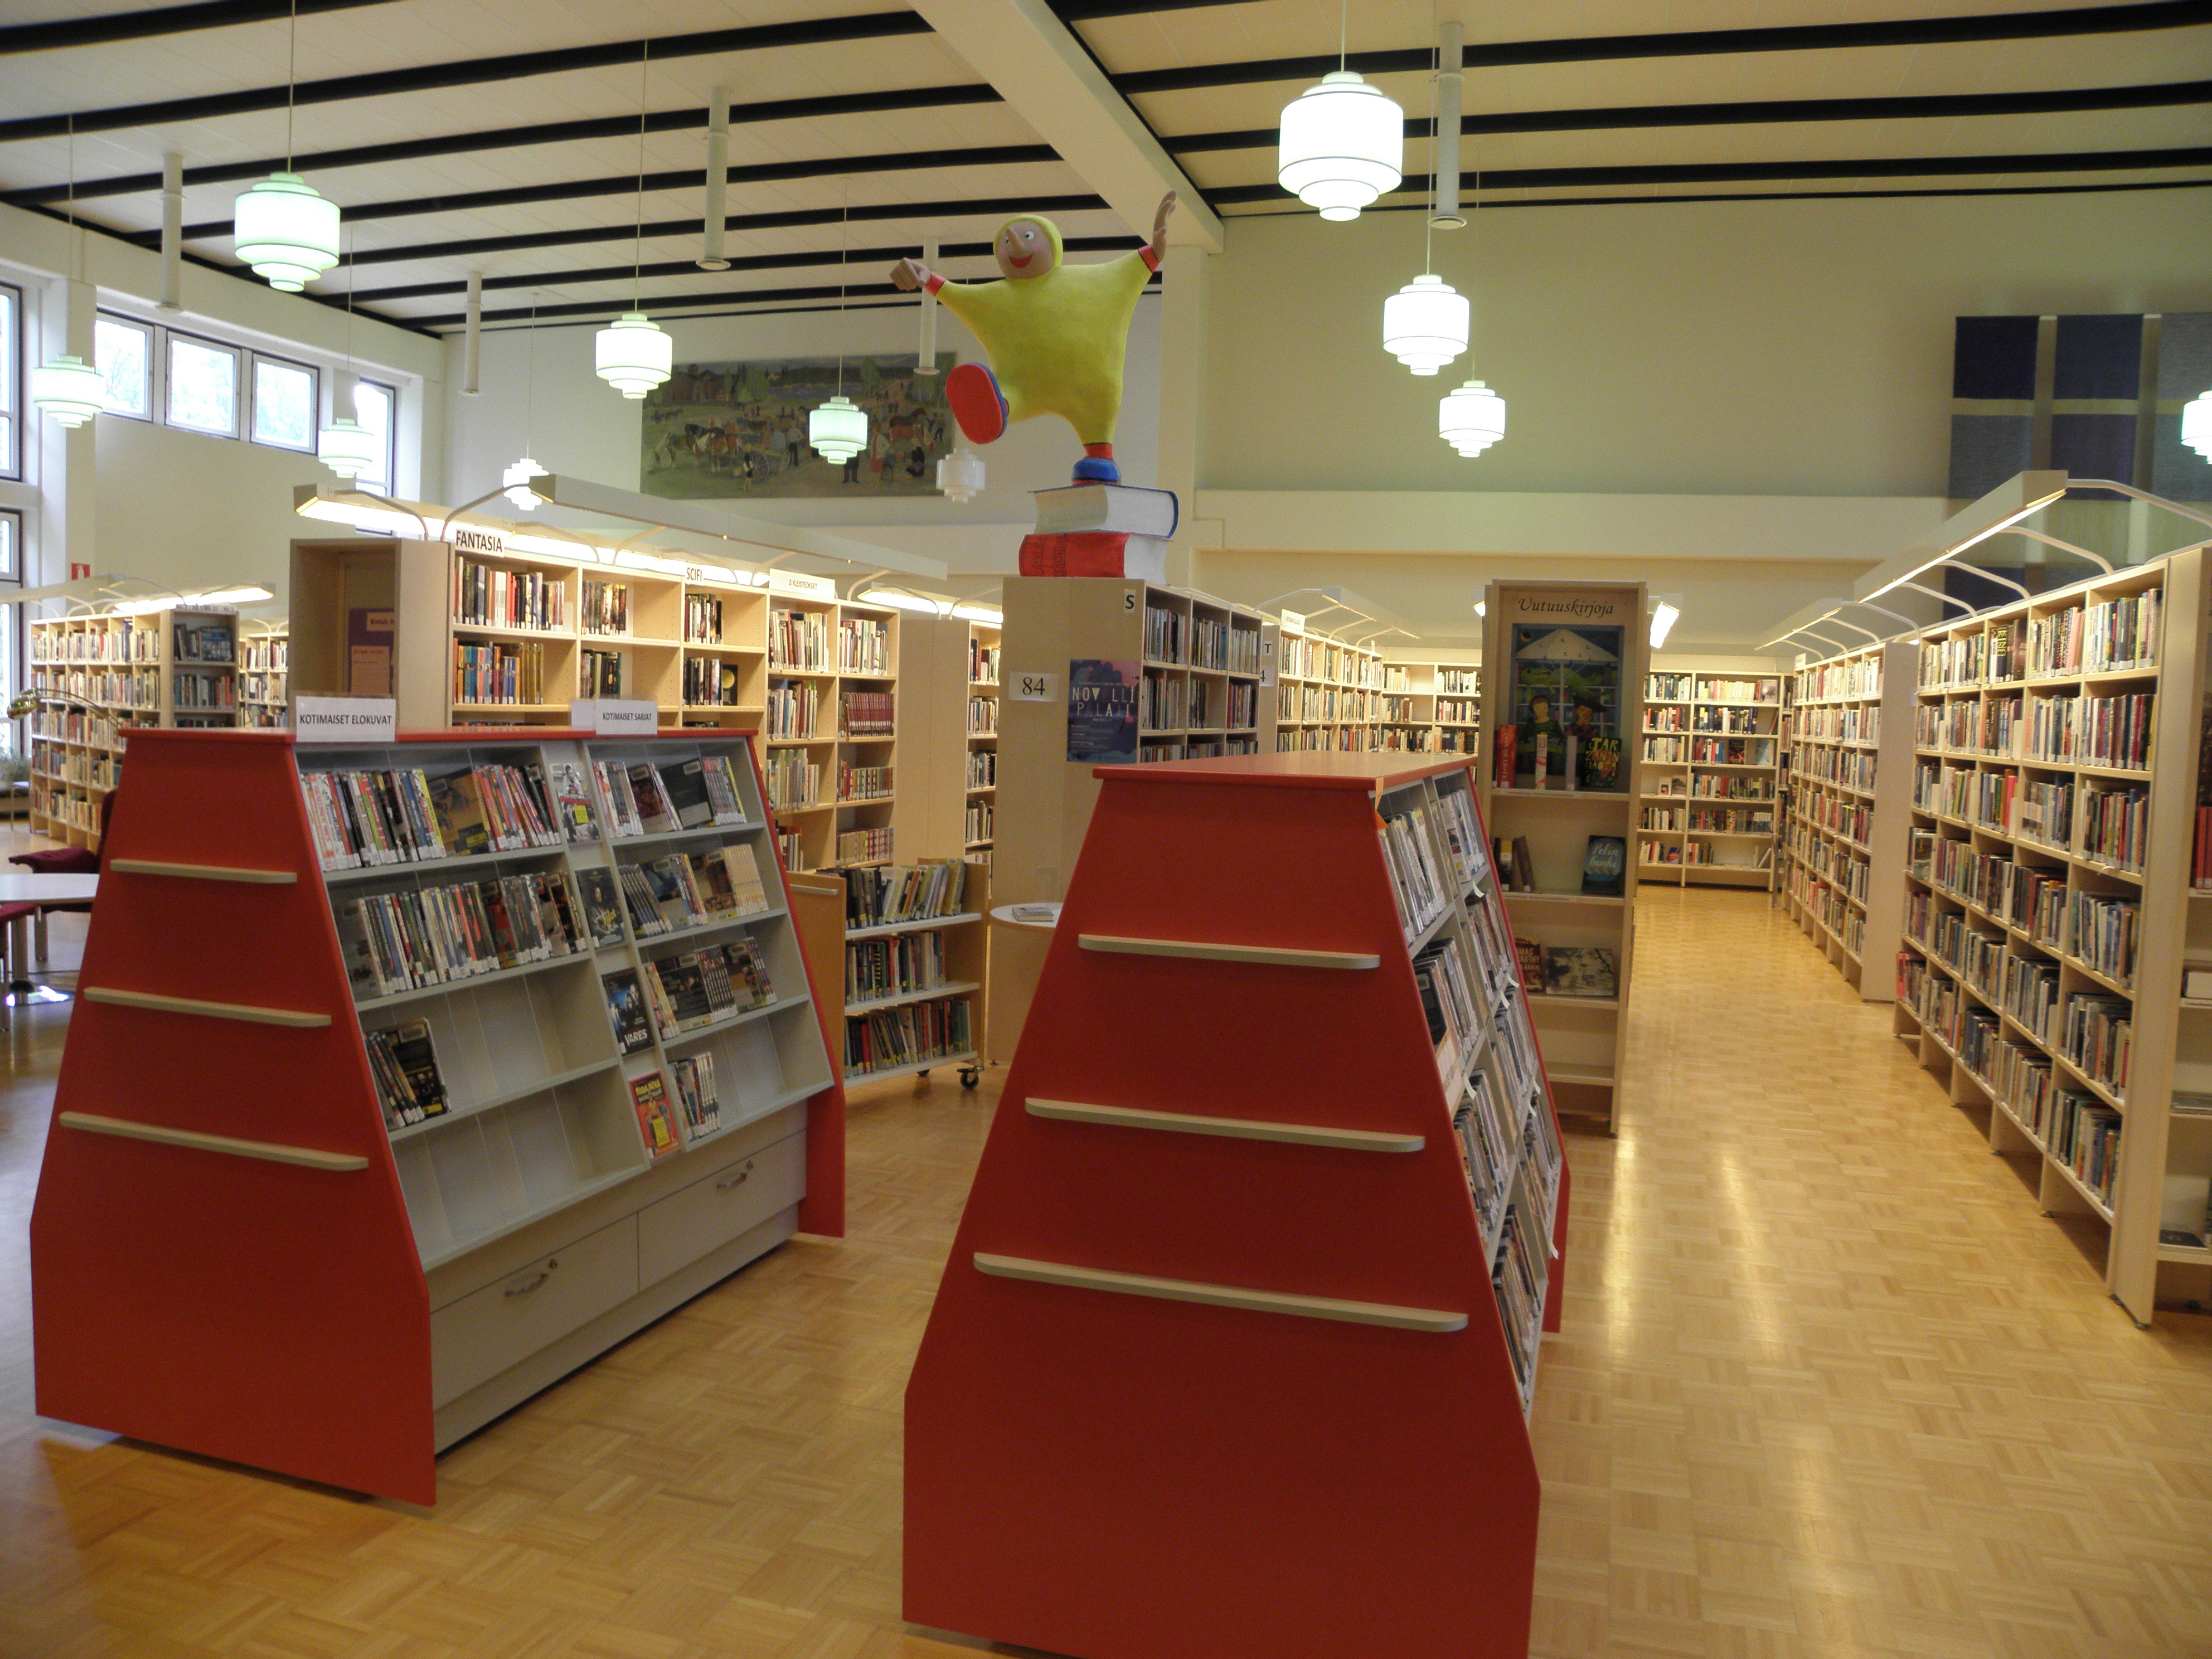 База библиотек библиотеки россии детям. Библиотеки России детям портал база библиотек.